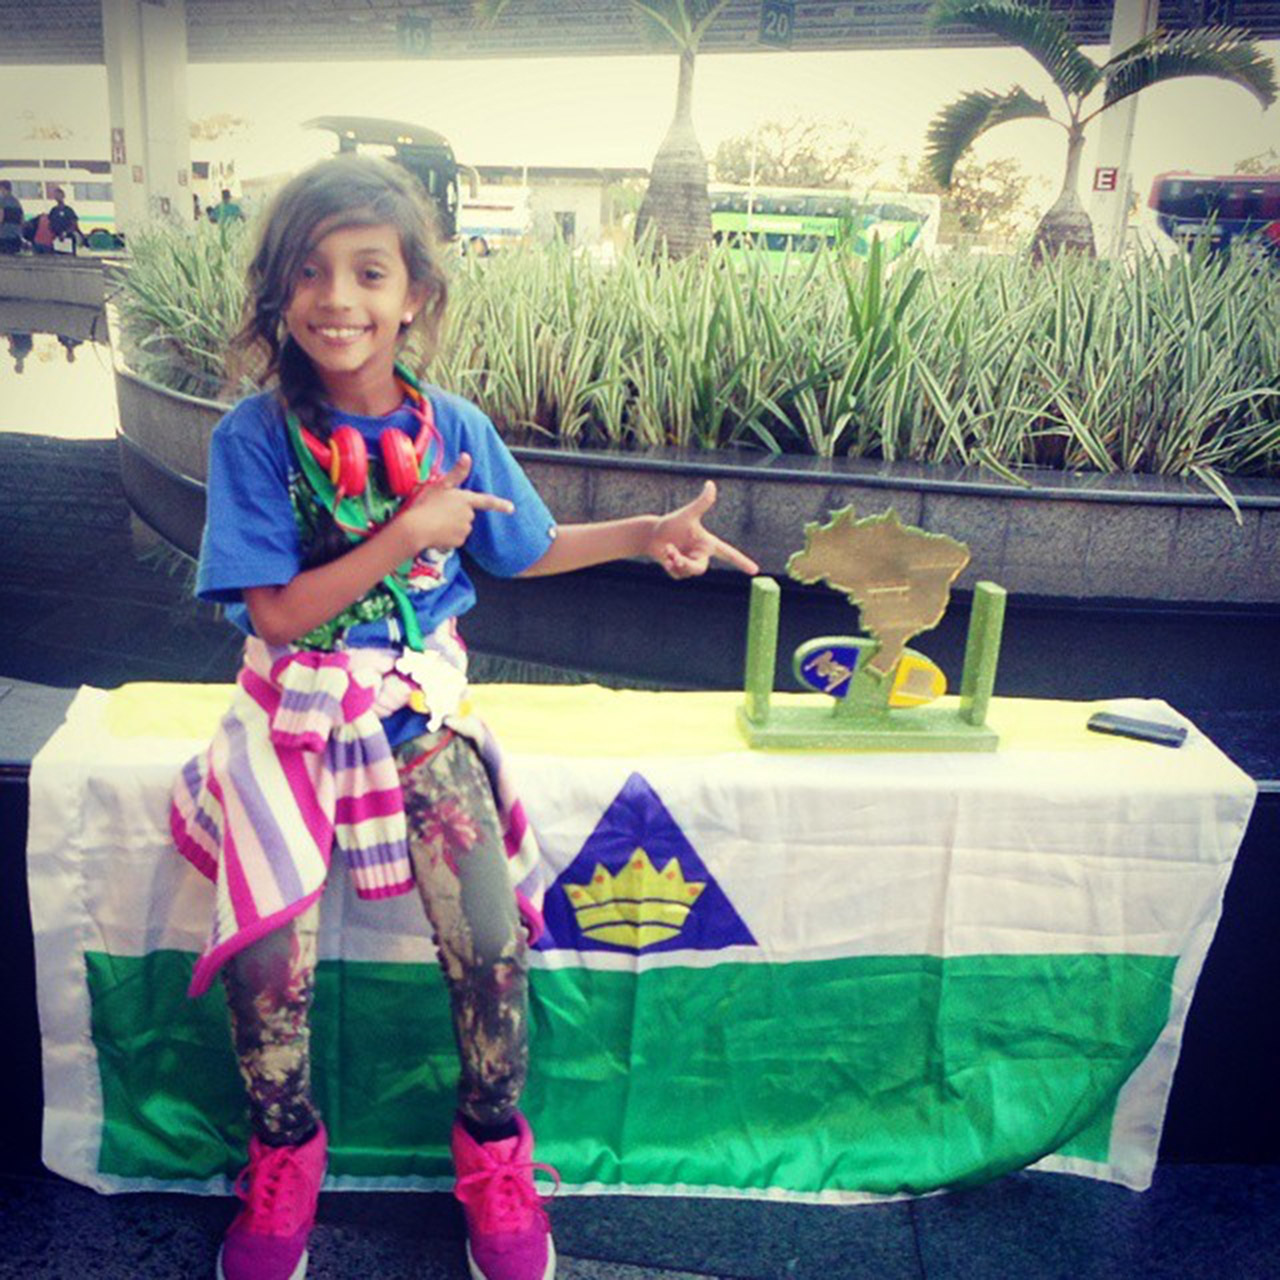 Brazilian 7-year-old Rayssa Leal is a skateboarding prodigy